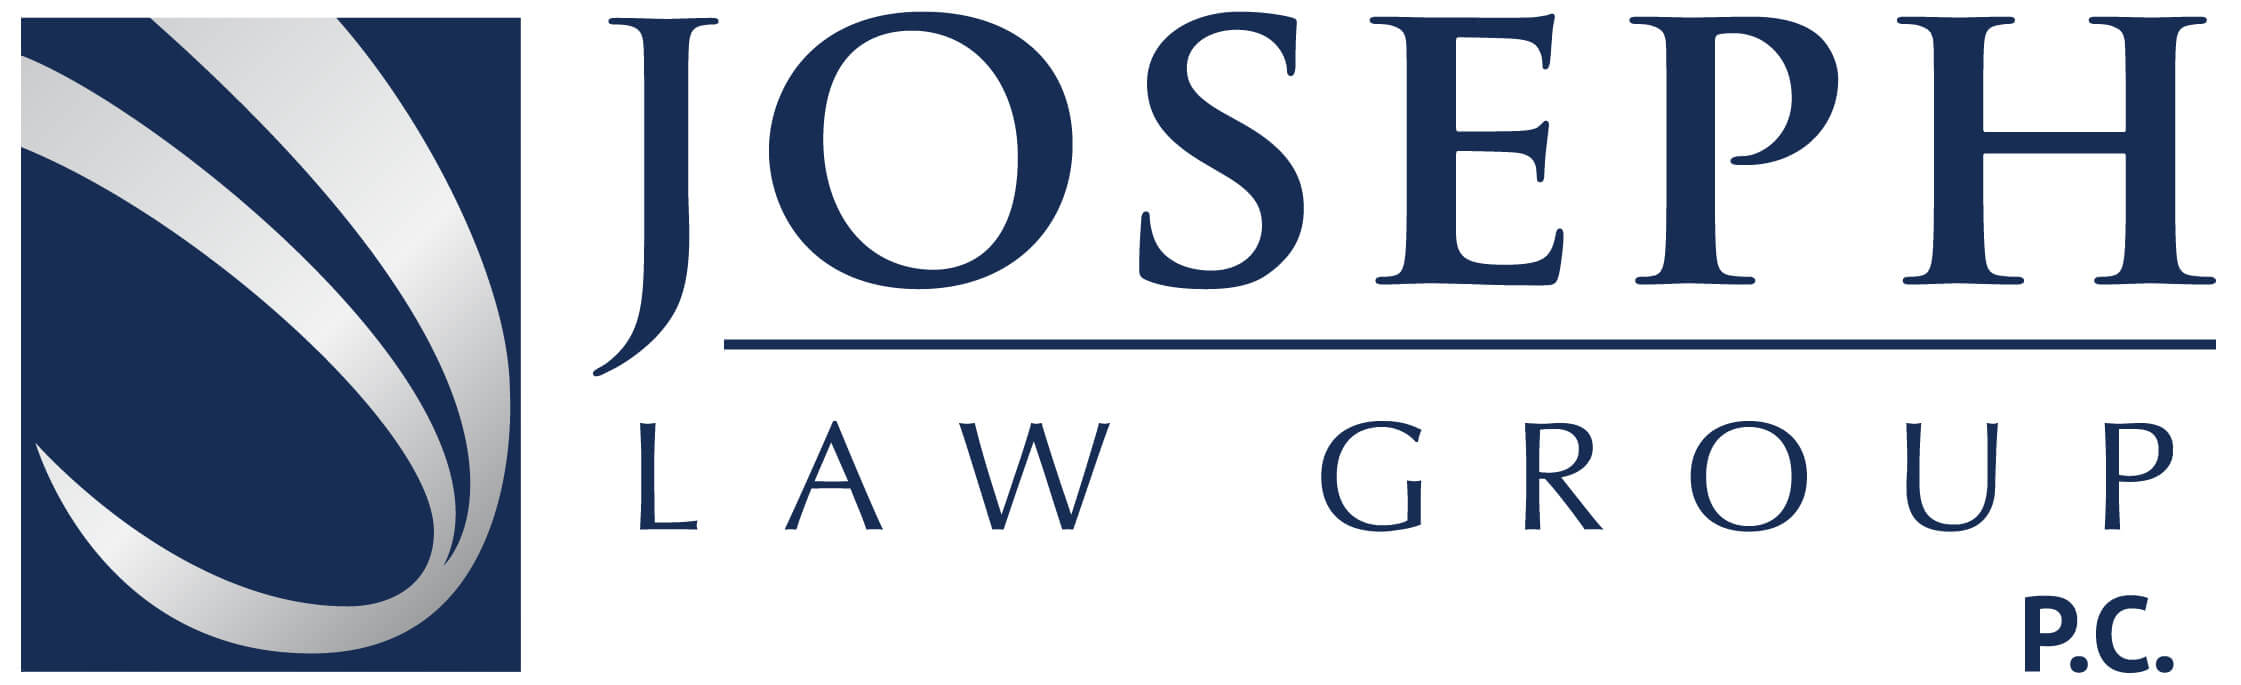 Joseph Law Group Pc Garden City Divorce Family Lawyers